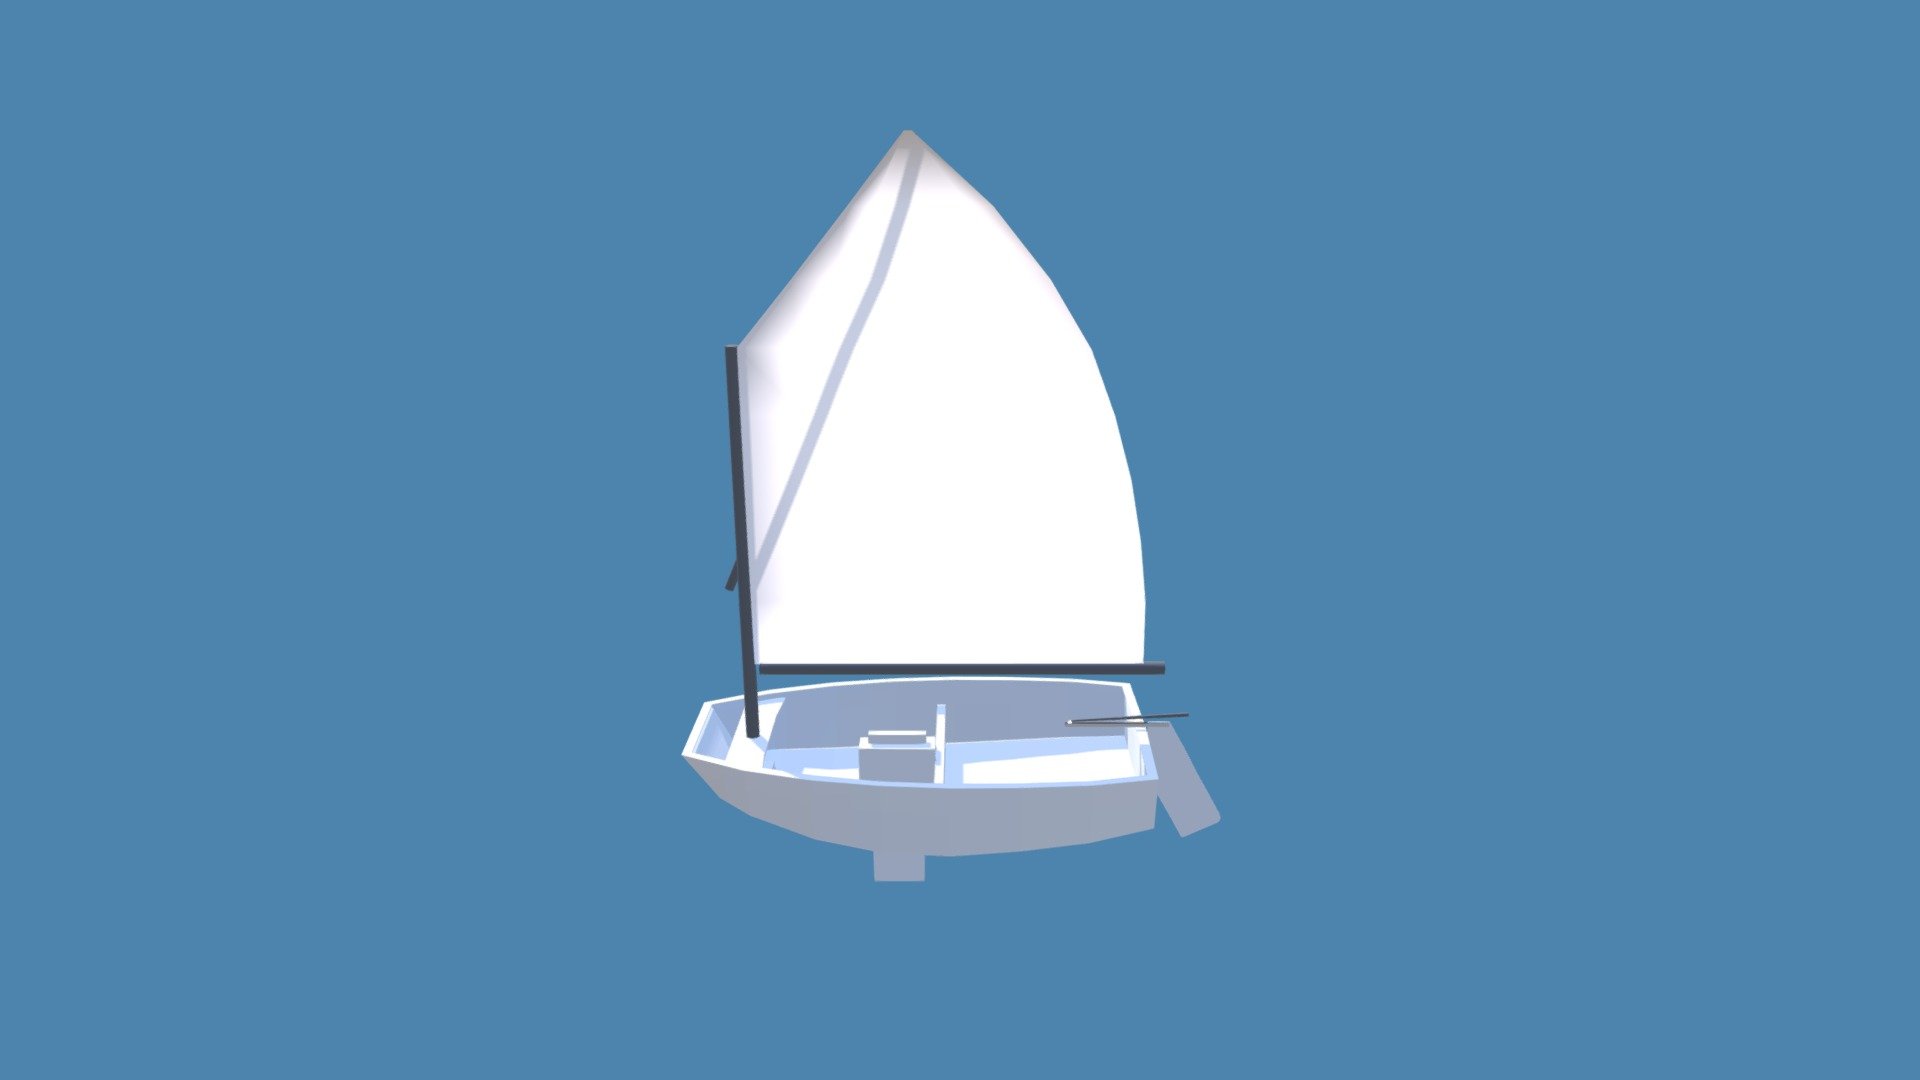 optimist sailboat